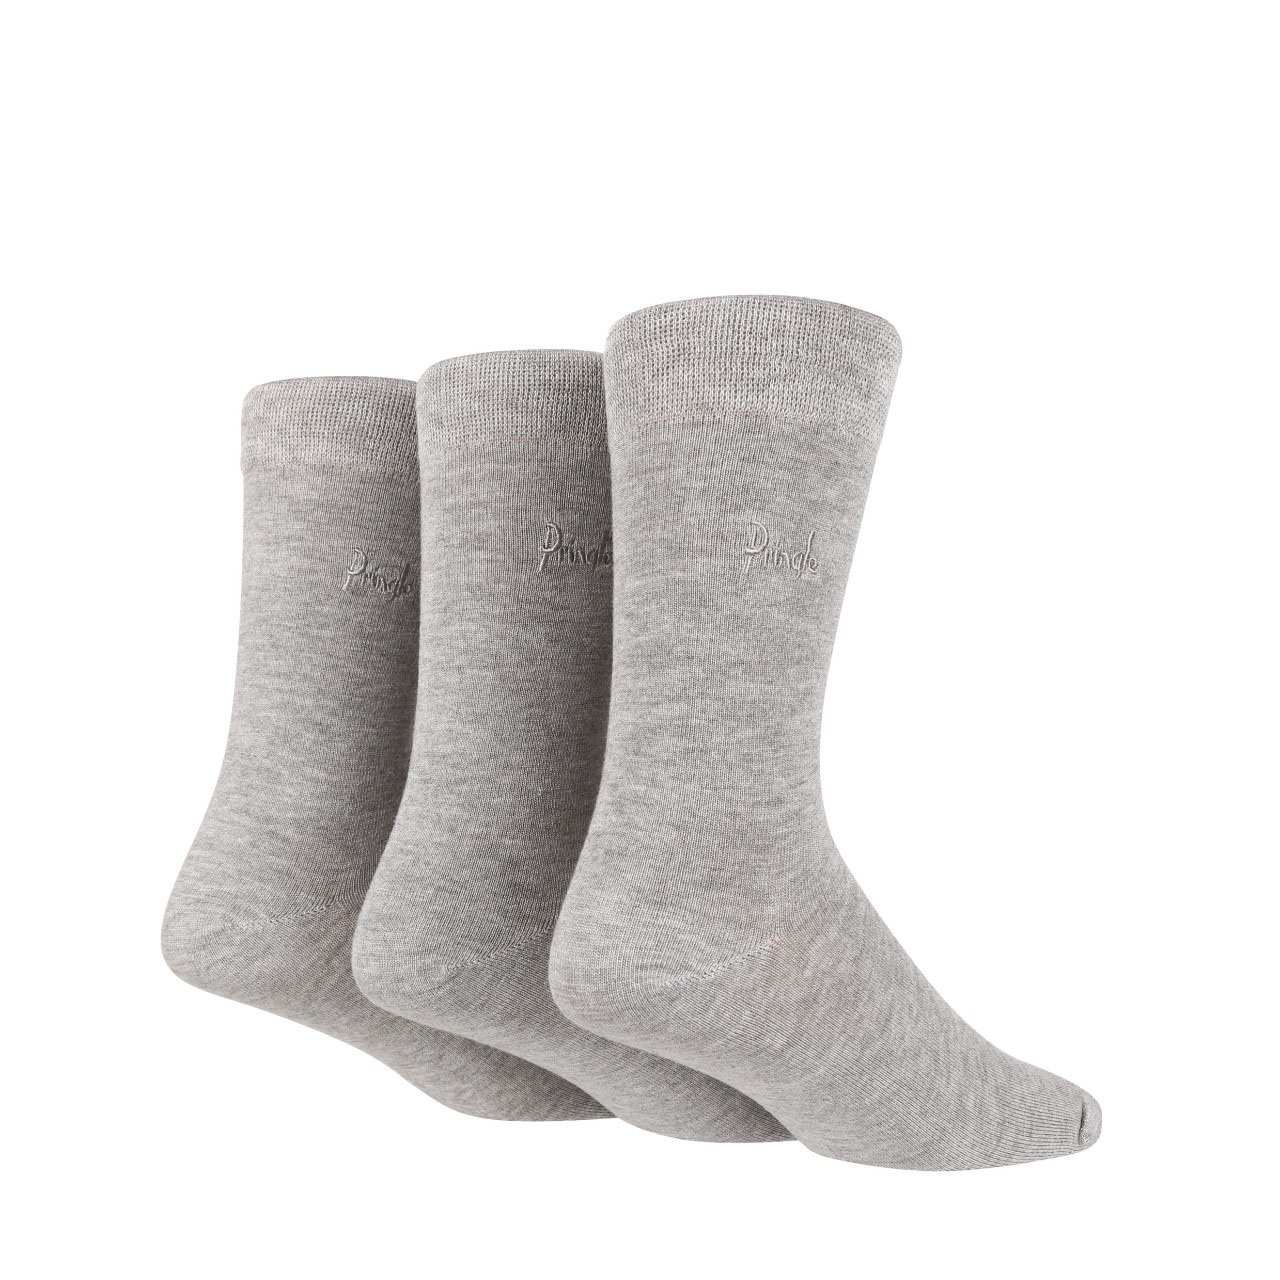 Men's Pringle Gentle-grip Bamboo Socks - Pack of 3